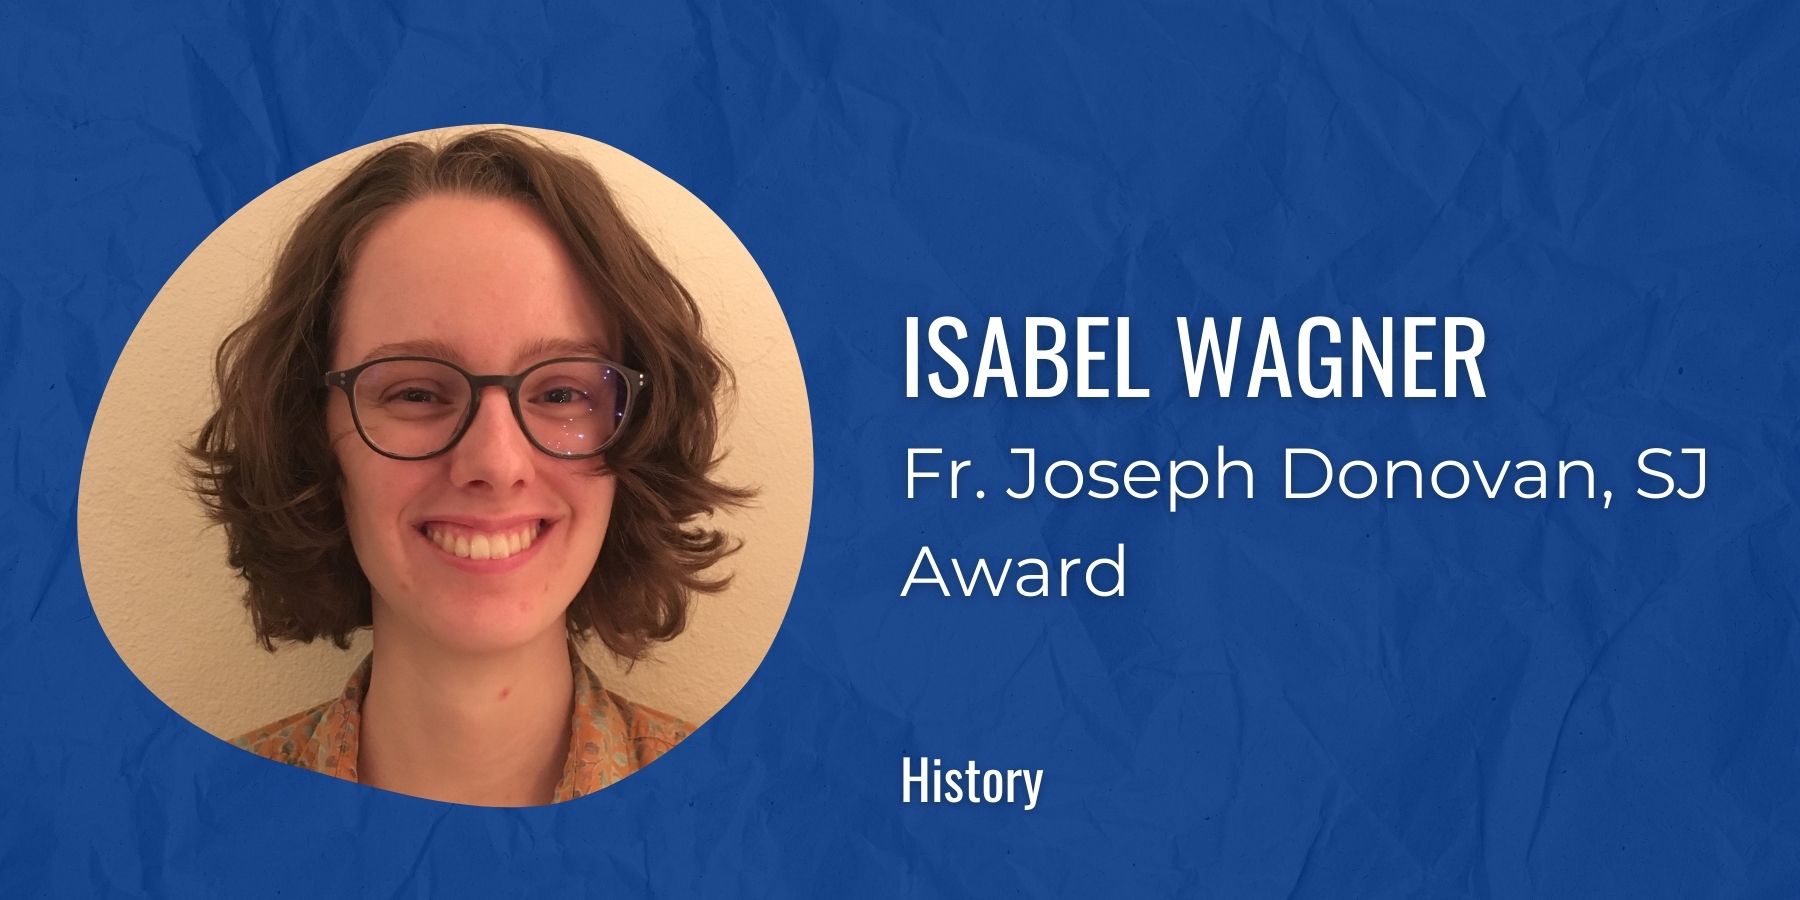 Image of Isabel Wagner with text: Fr. Joseph Donovan, SJ Award, History
